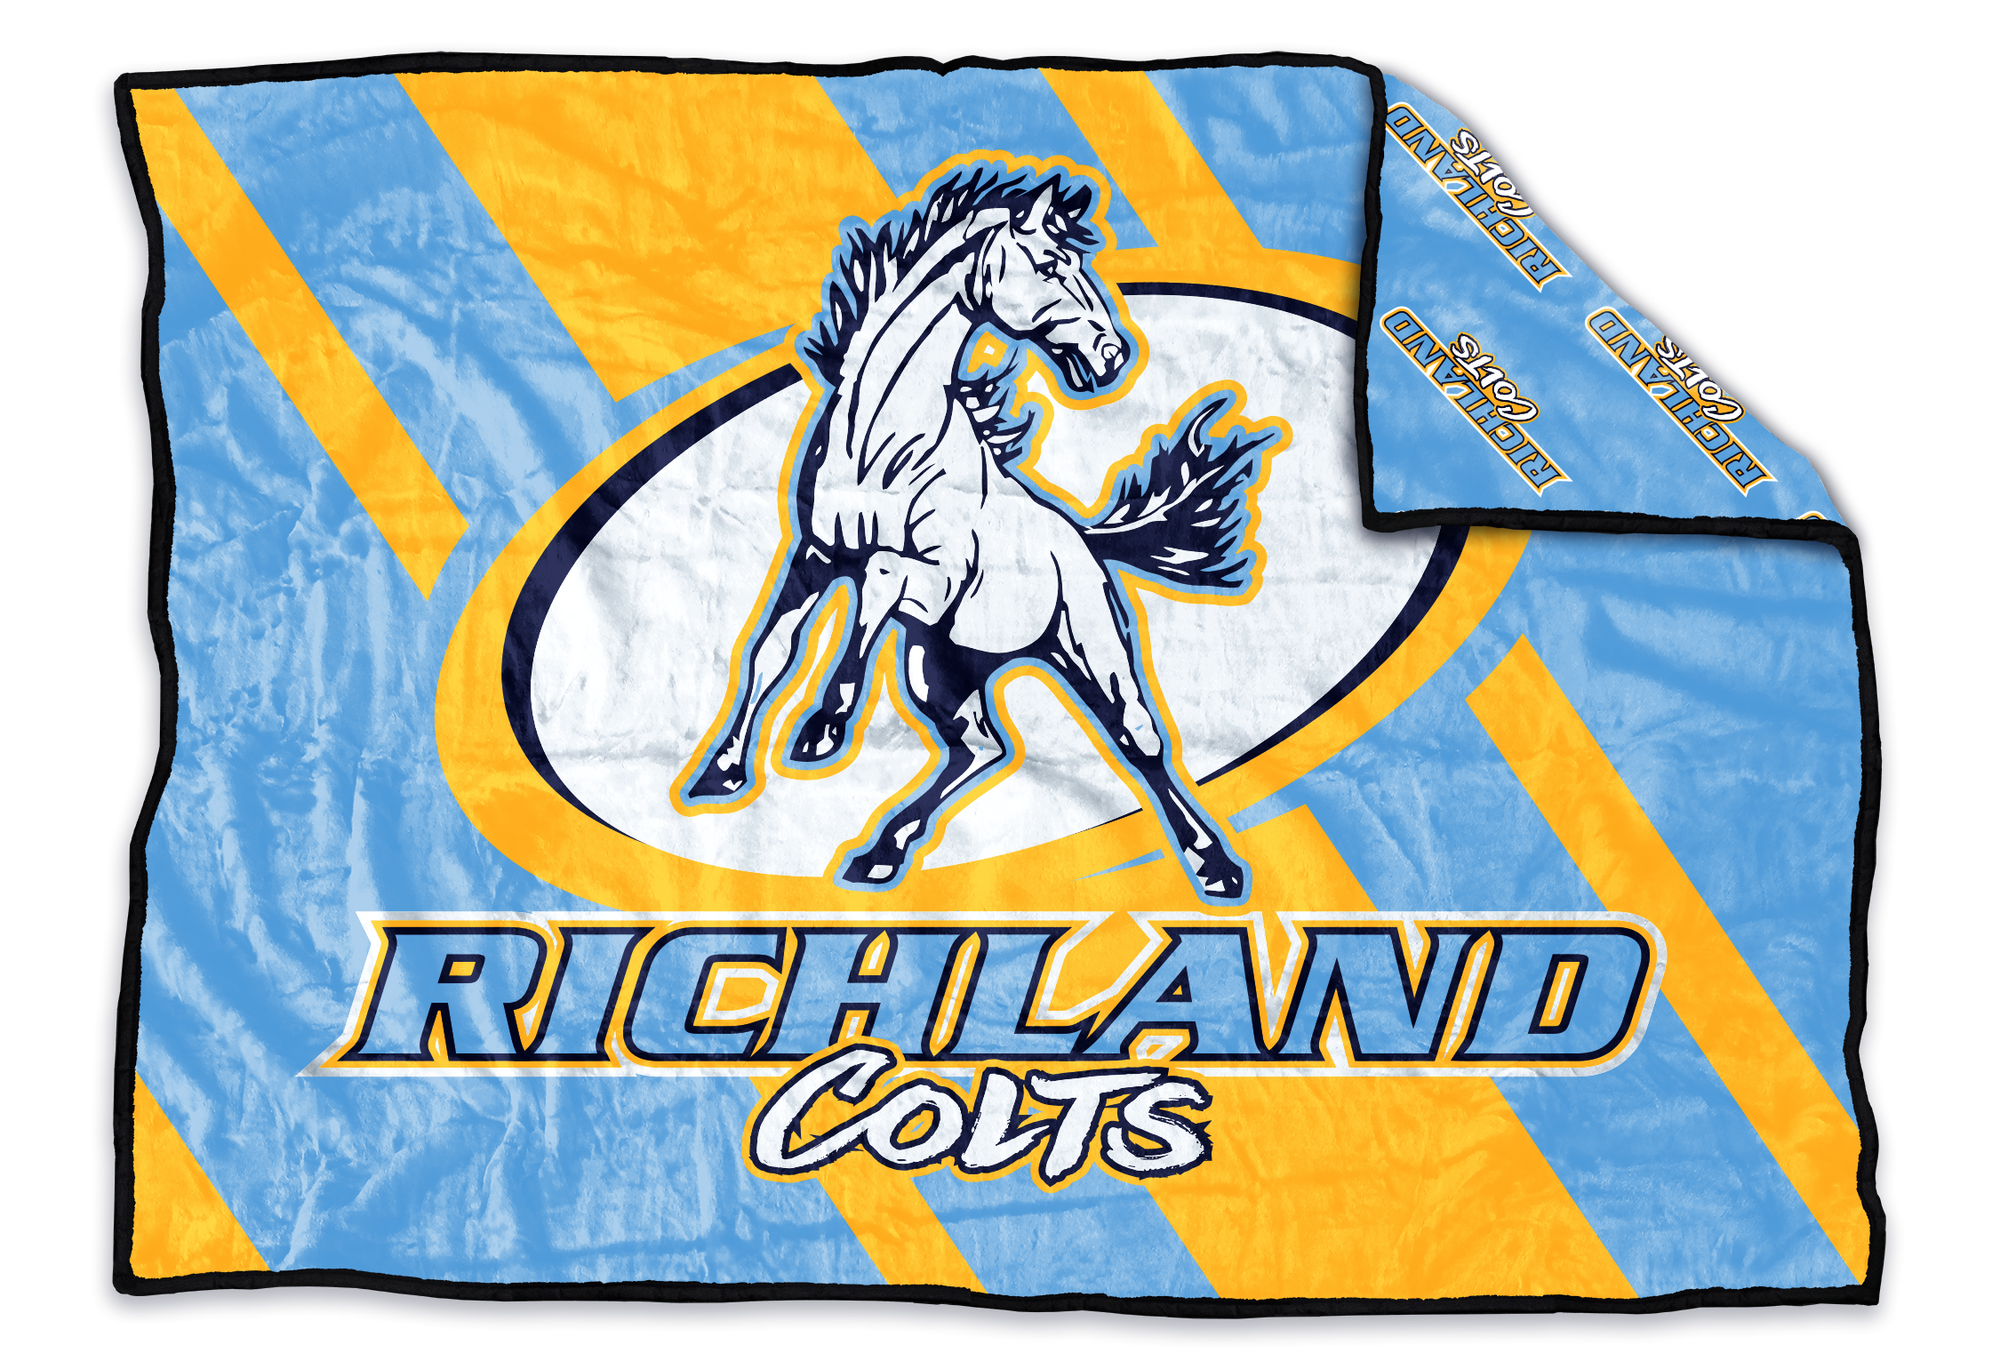 Richland Colts